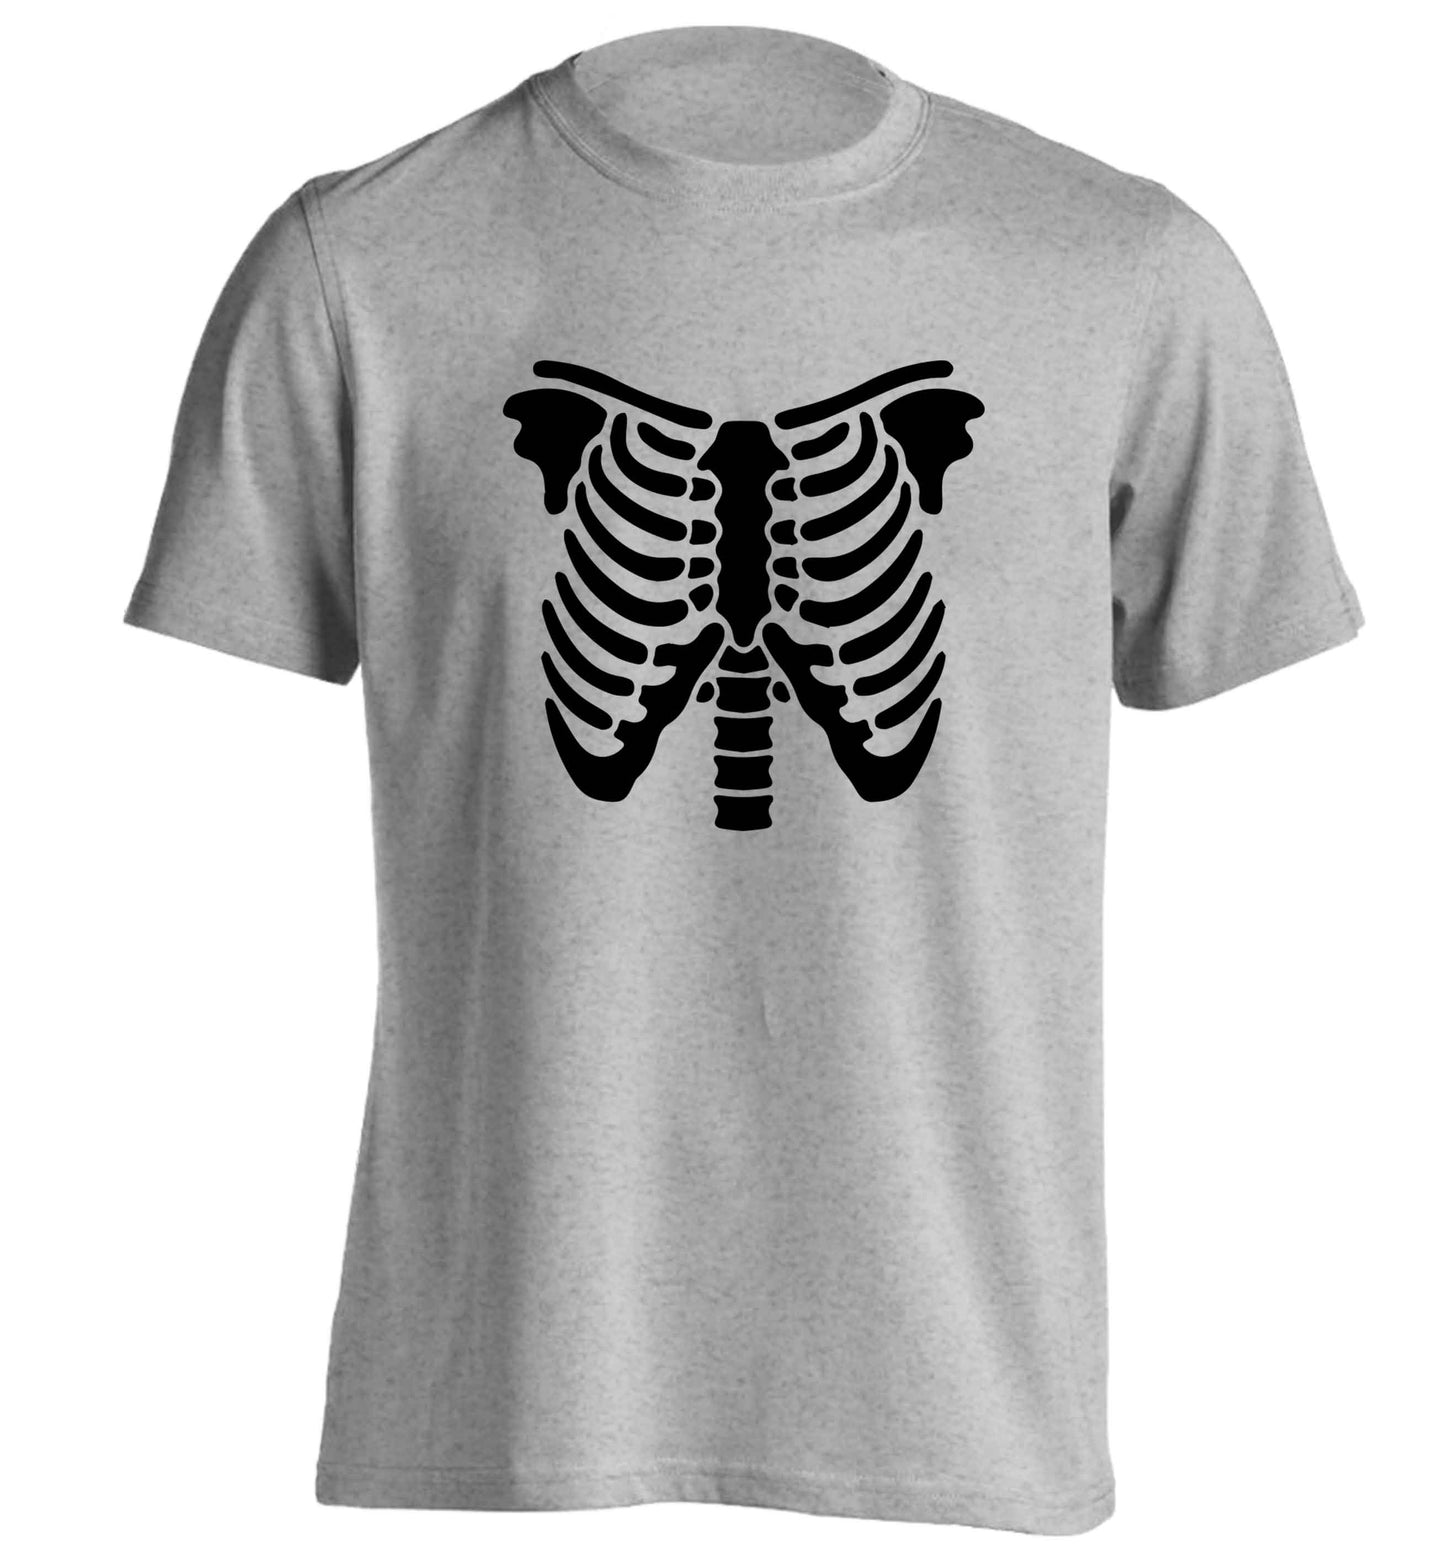 Skeleton ribcage adults unisex grey Tshirt 2XL